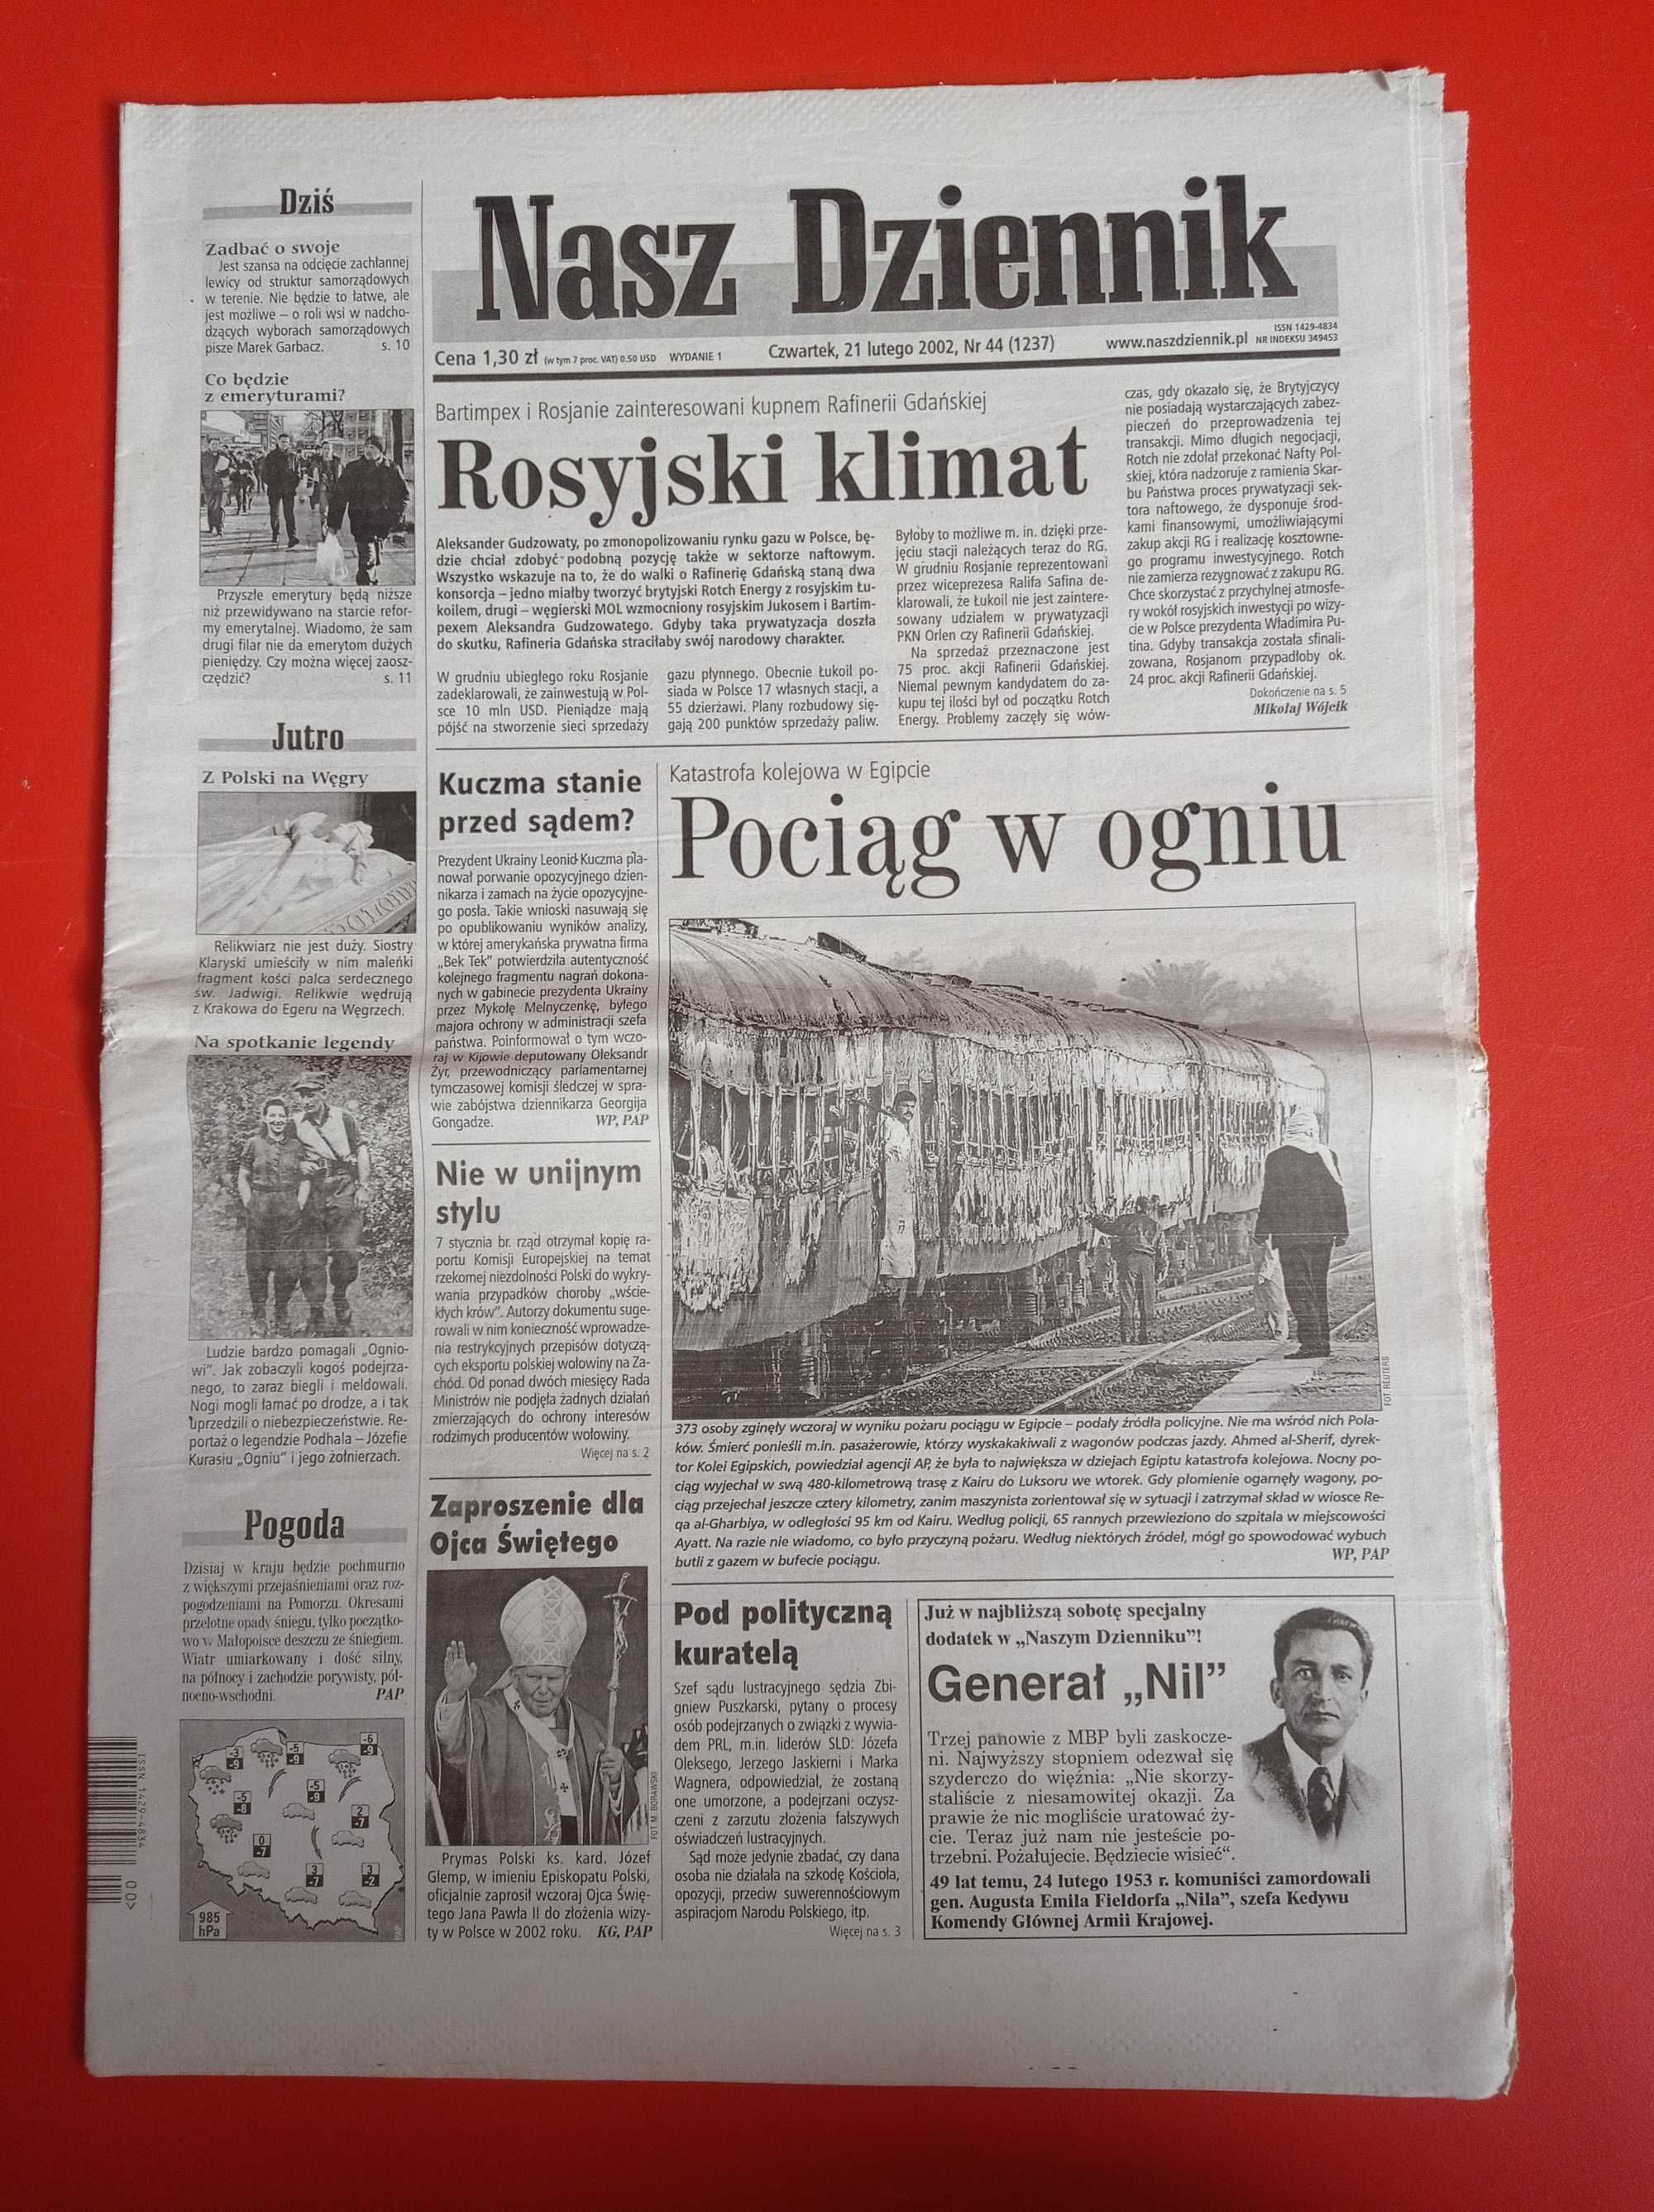 Nasz Dziennik, nr 44/2002, 21 lutego 2002